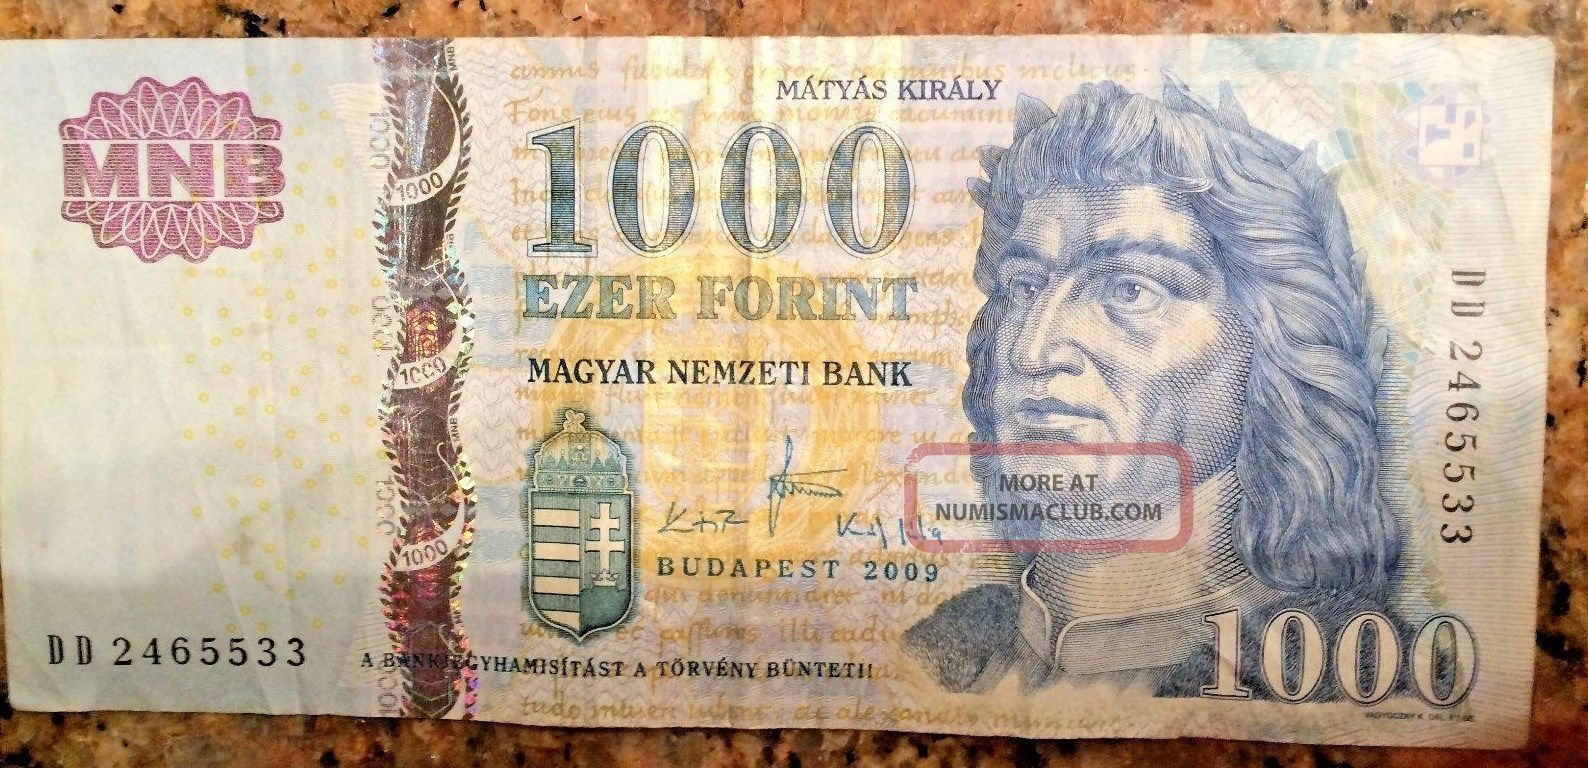 2009 Budapest Hungary 1000 Ezer Forint Bank Note Magyar Nemzeti Bank Foil Strip Europe photo